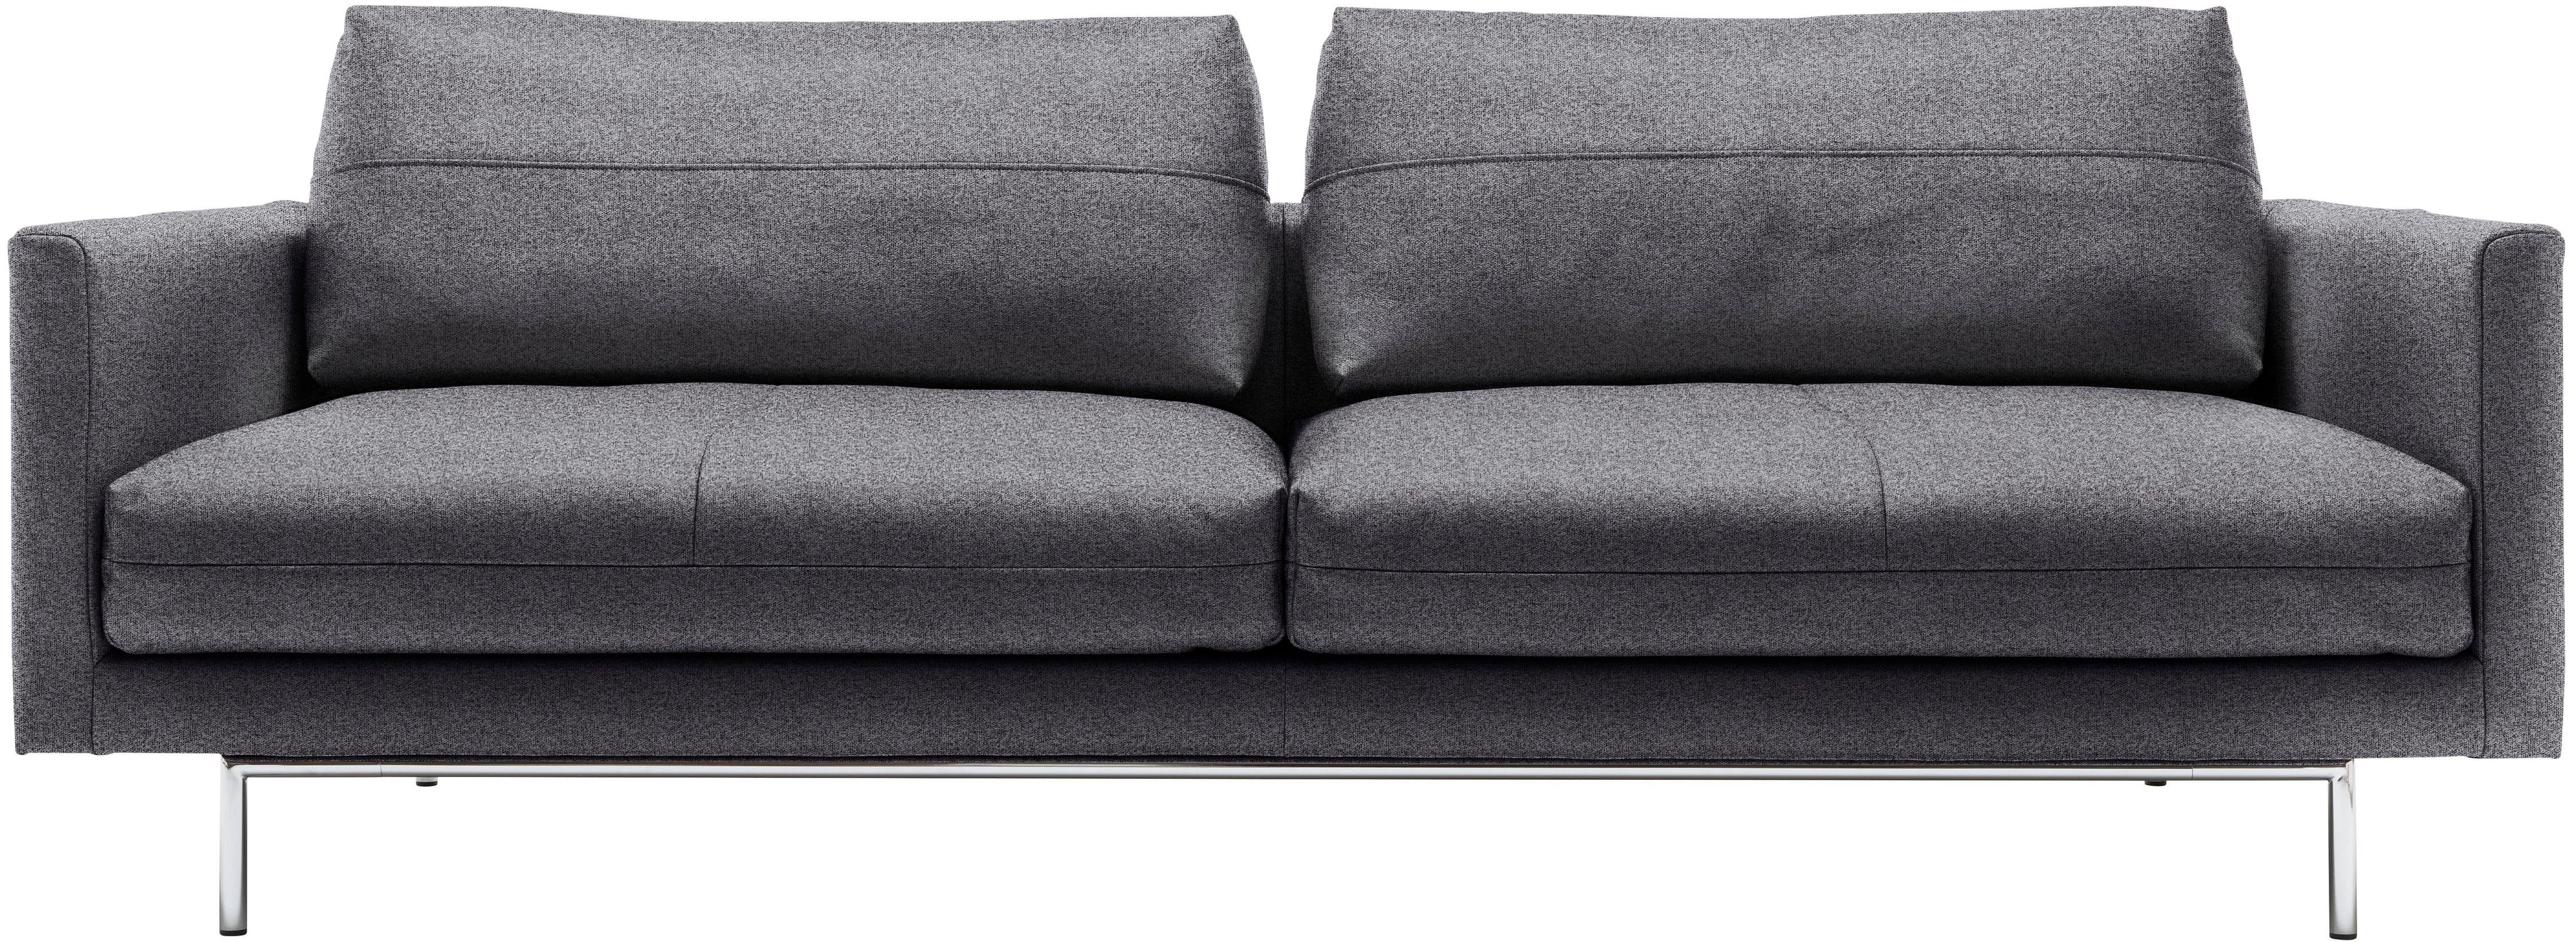 hülsta sofa 3-Sitzer anthr-swgr | anthrazitgrau / schwarzgrau